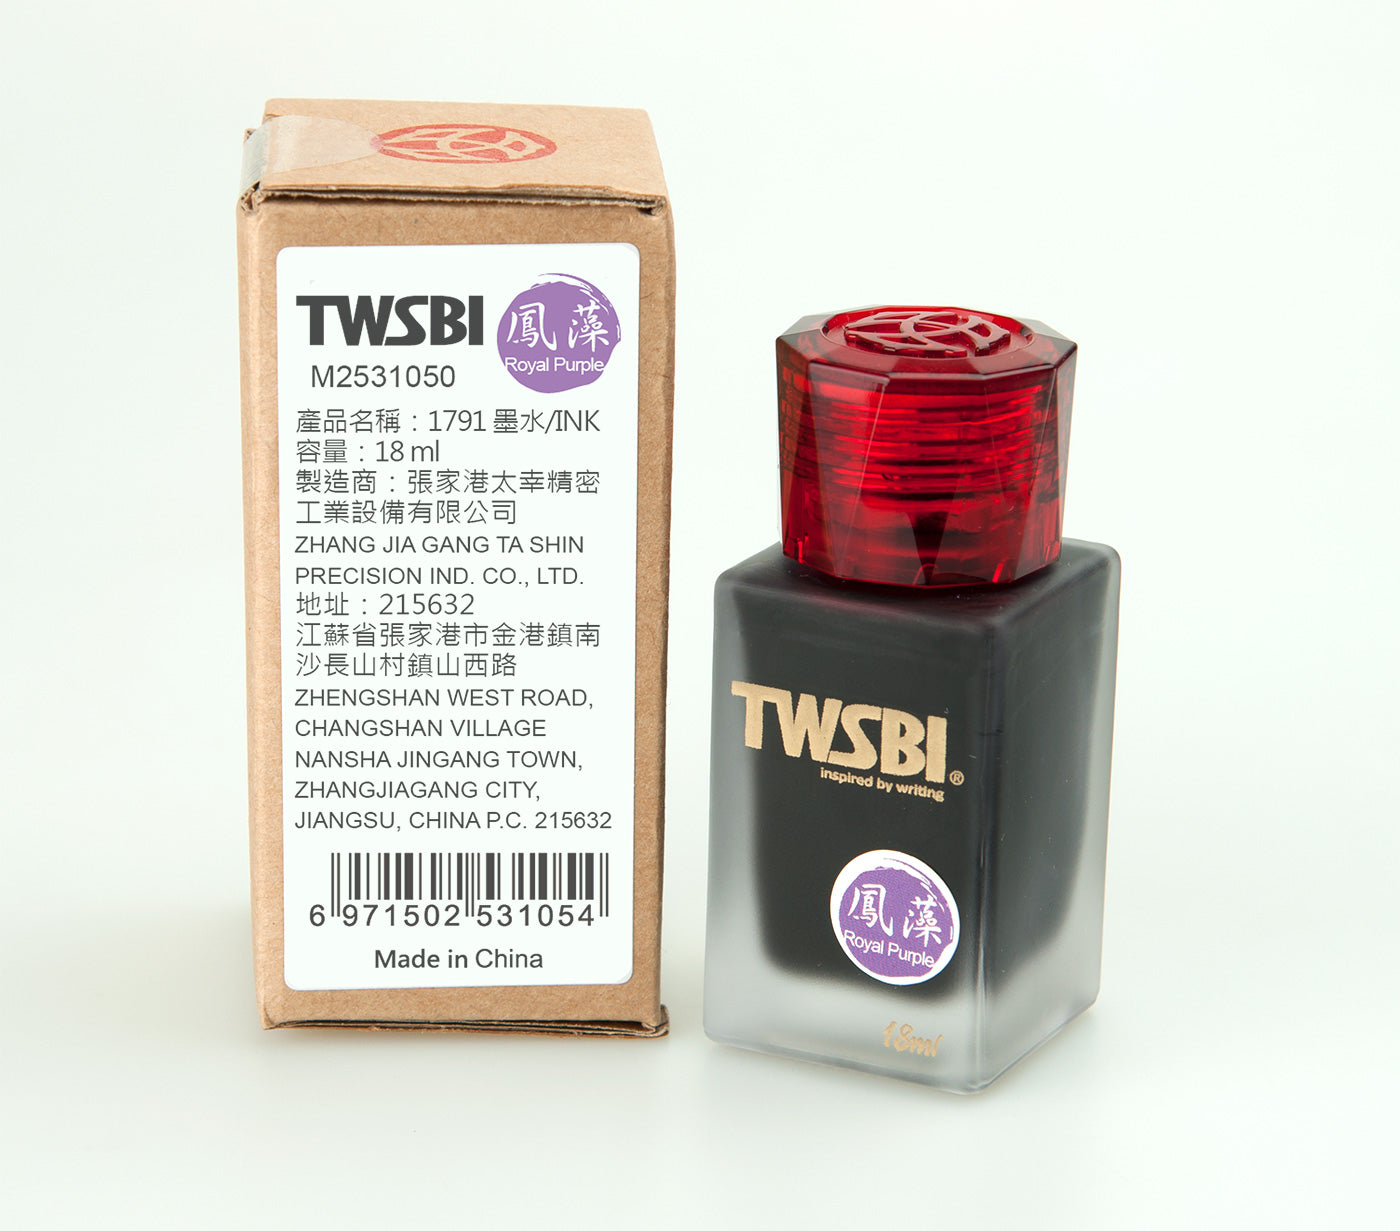 TWSBI 1791 Ink - Royal Purple